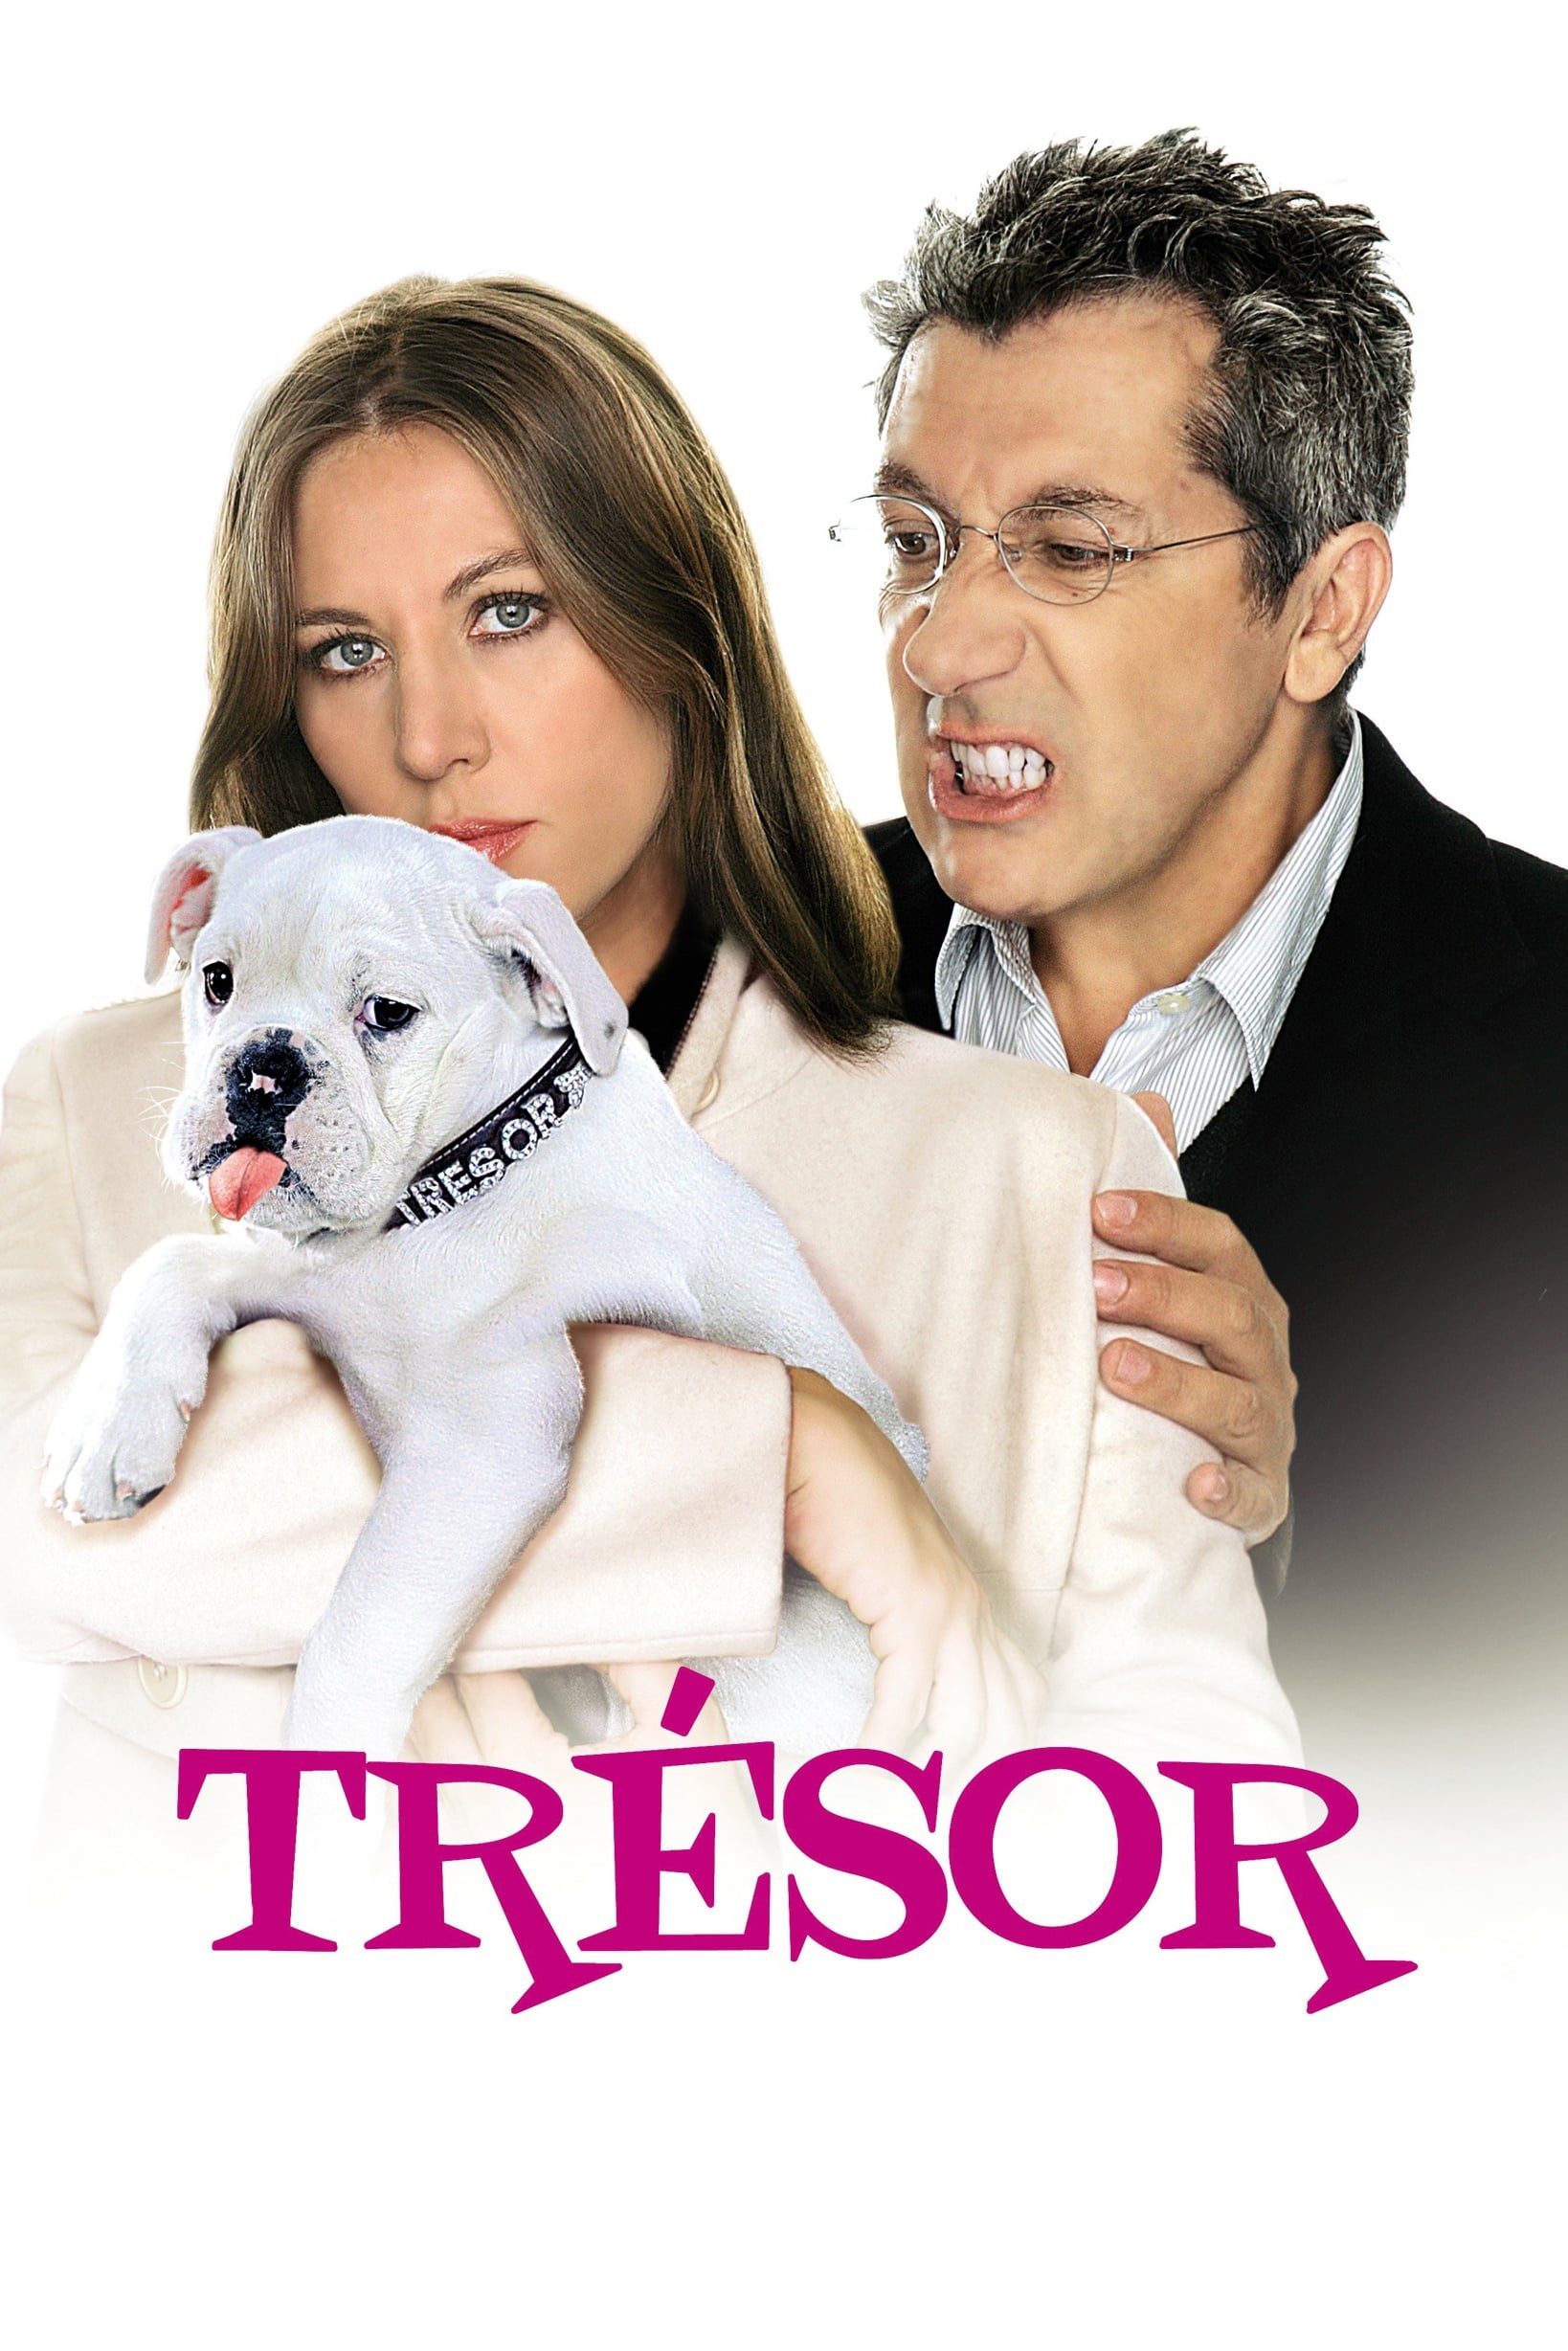 Tresor (2009)